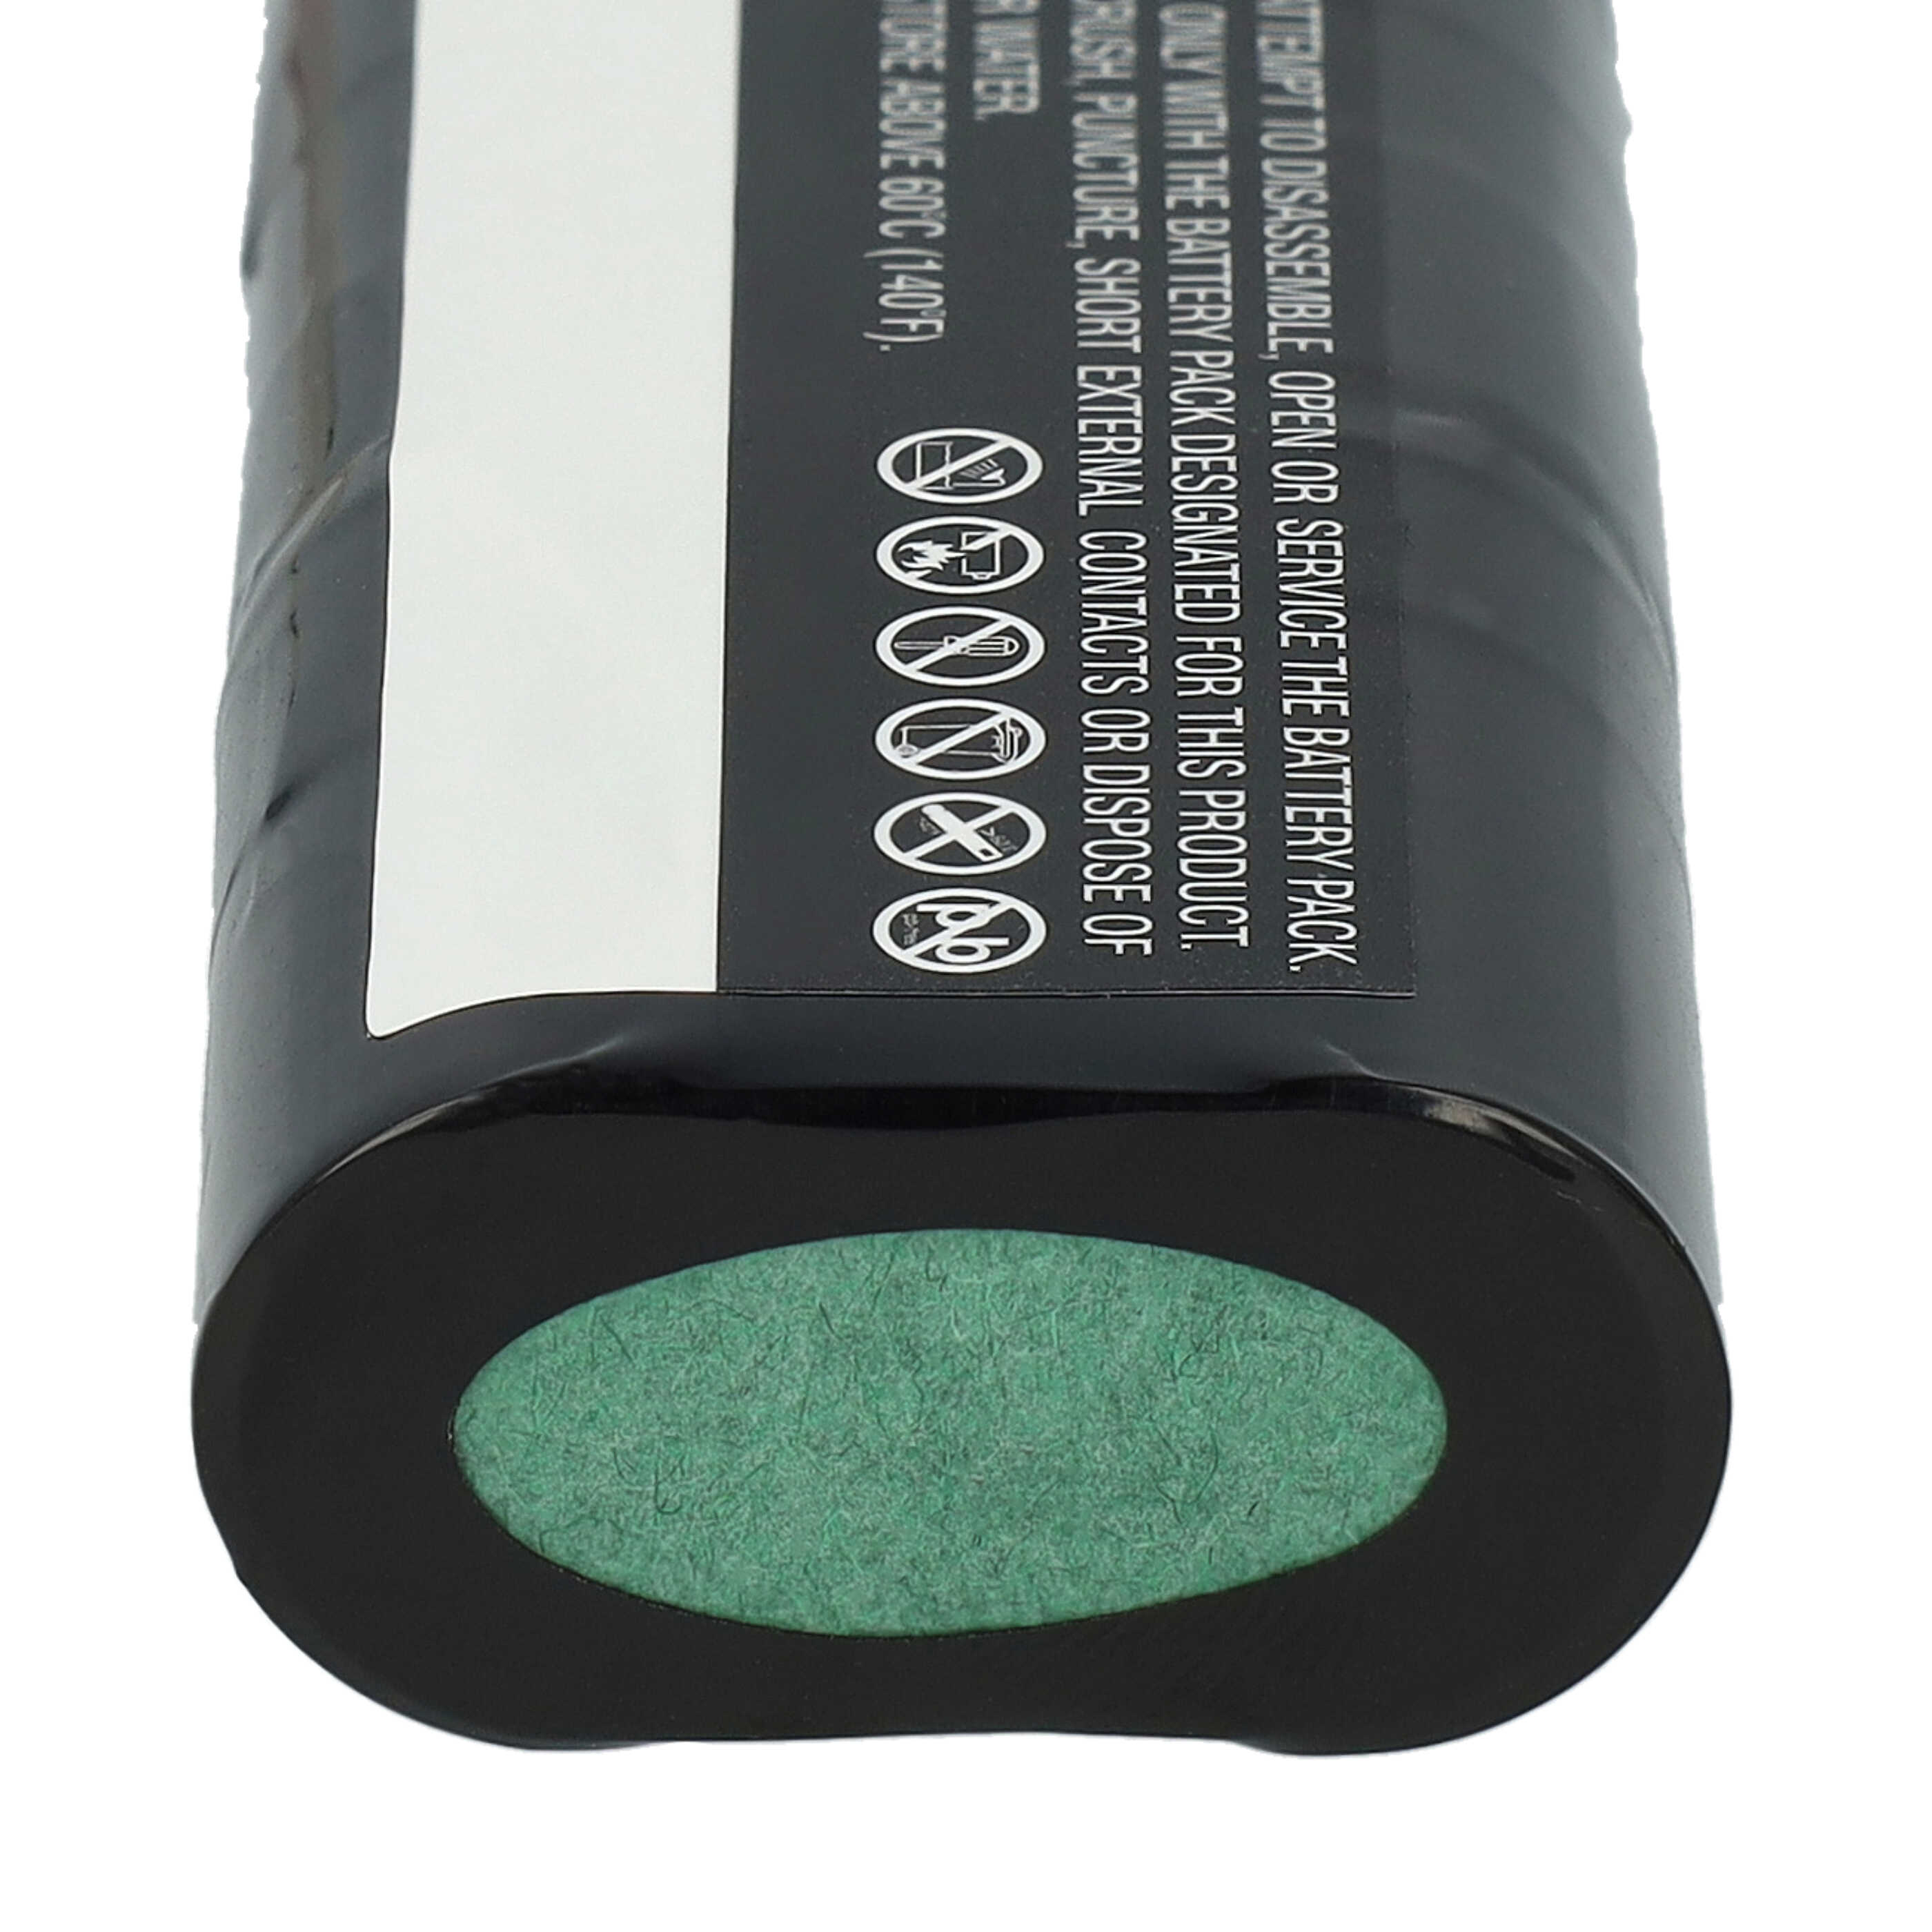 Batteria sostituisce 00185-2, 001852, 4032-001 per strumenti medici Schiller America - 3000mAh 12V Li-MnO2